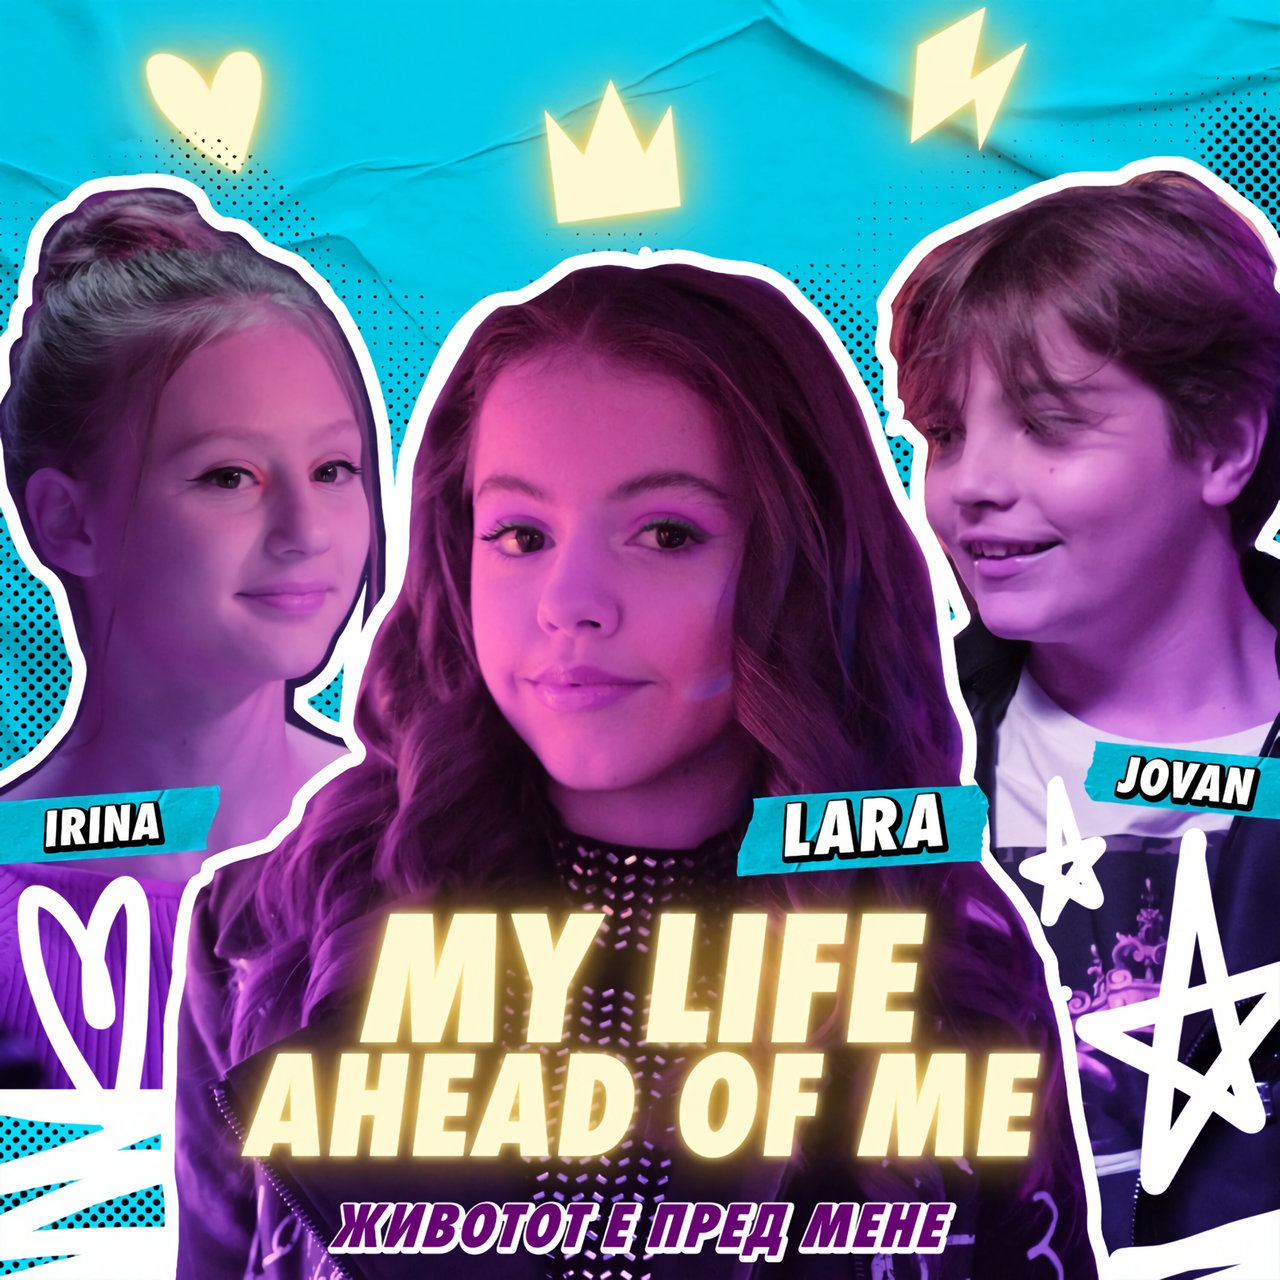 Lara featuring Jovan & Irina — Životot E Pred Mene cover artwork